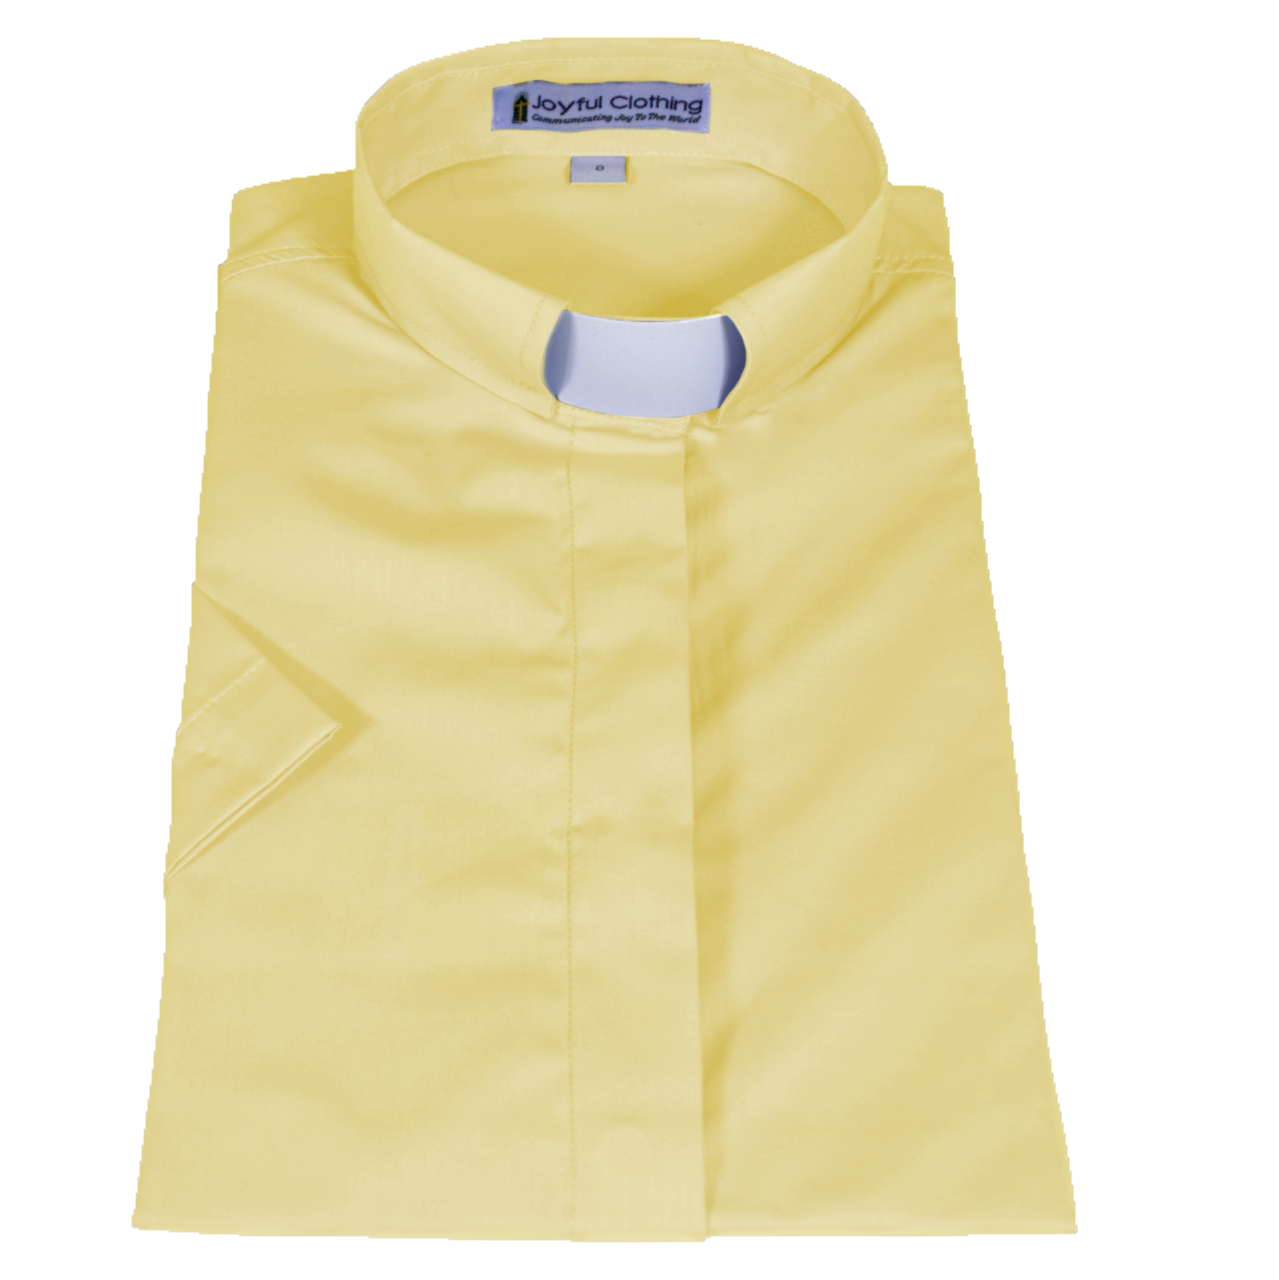 566. Women's Short-Sleeve Tab-Collar Clergy Shirt - Banana